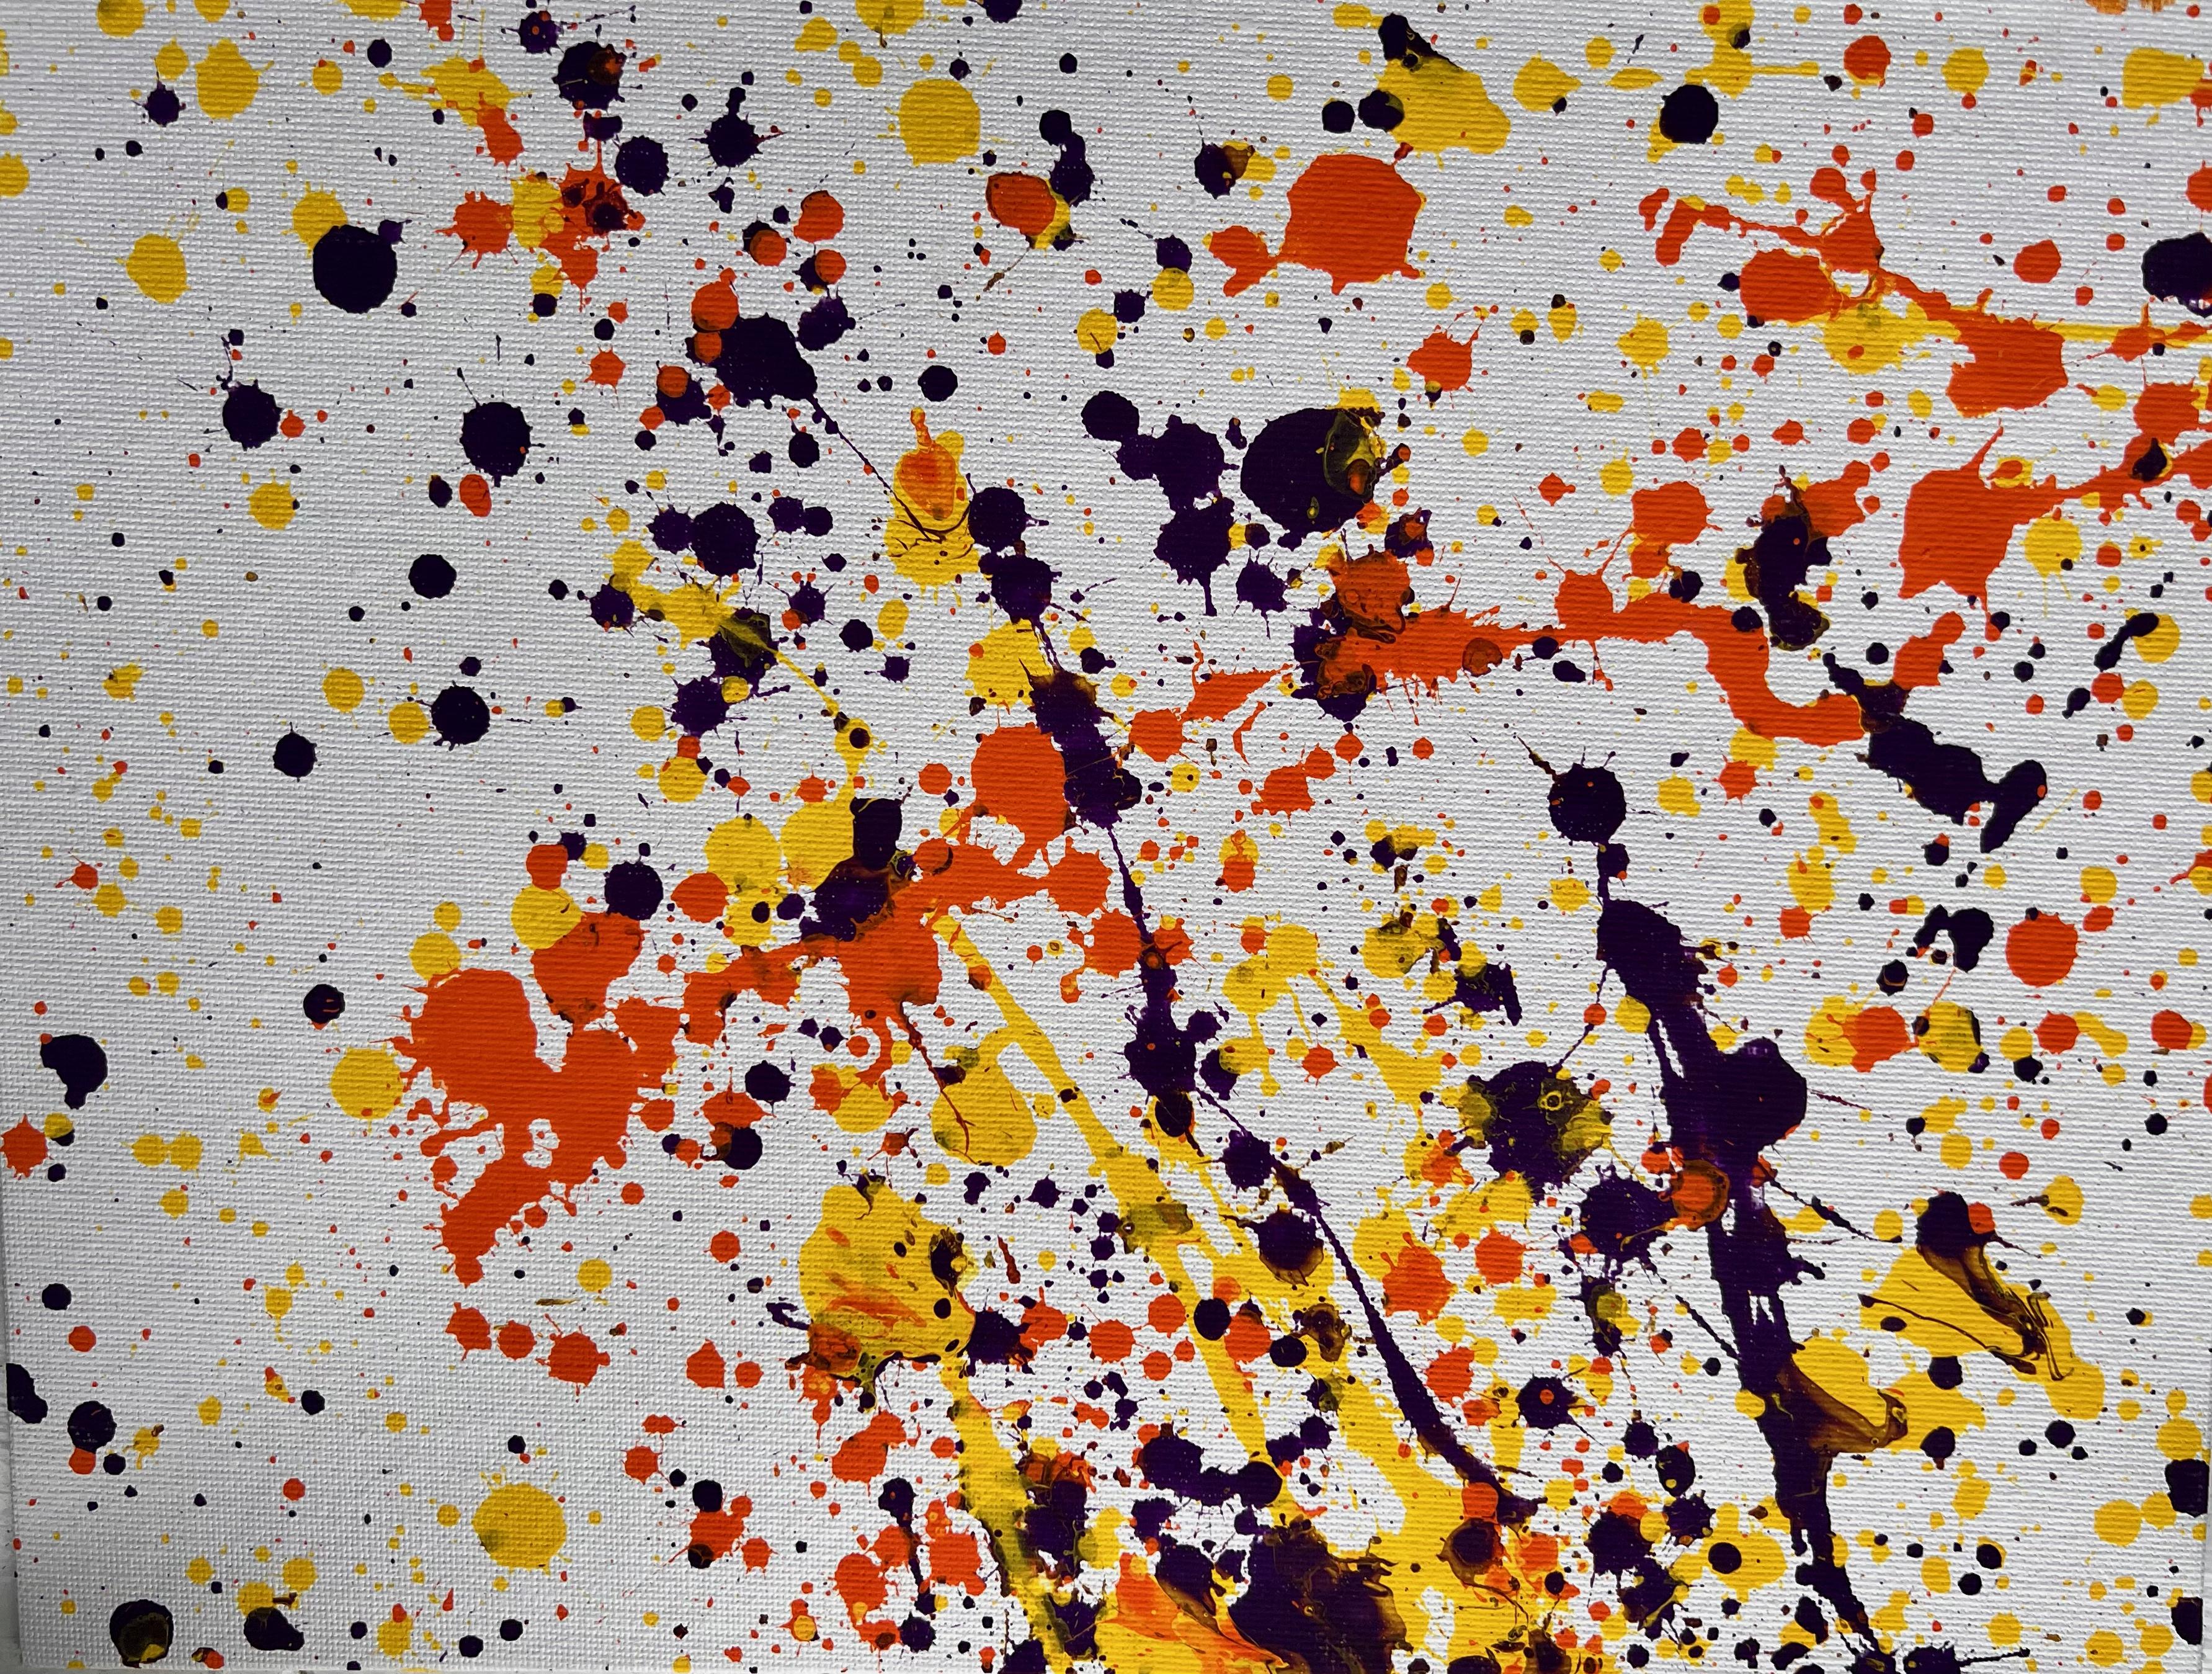 PreK Art inspired by Jackson Pollock